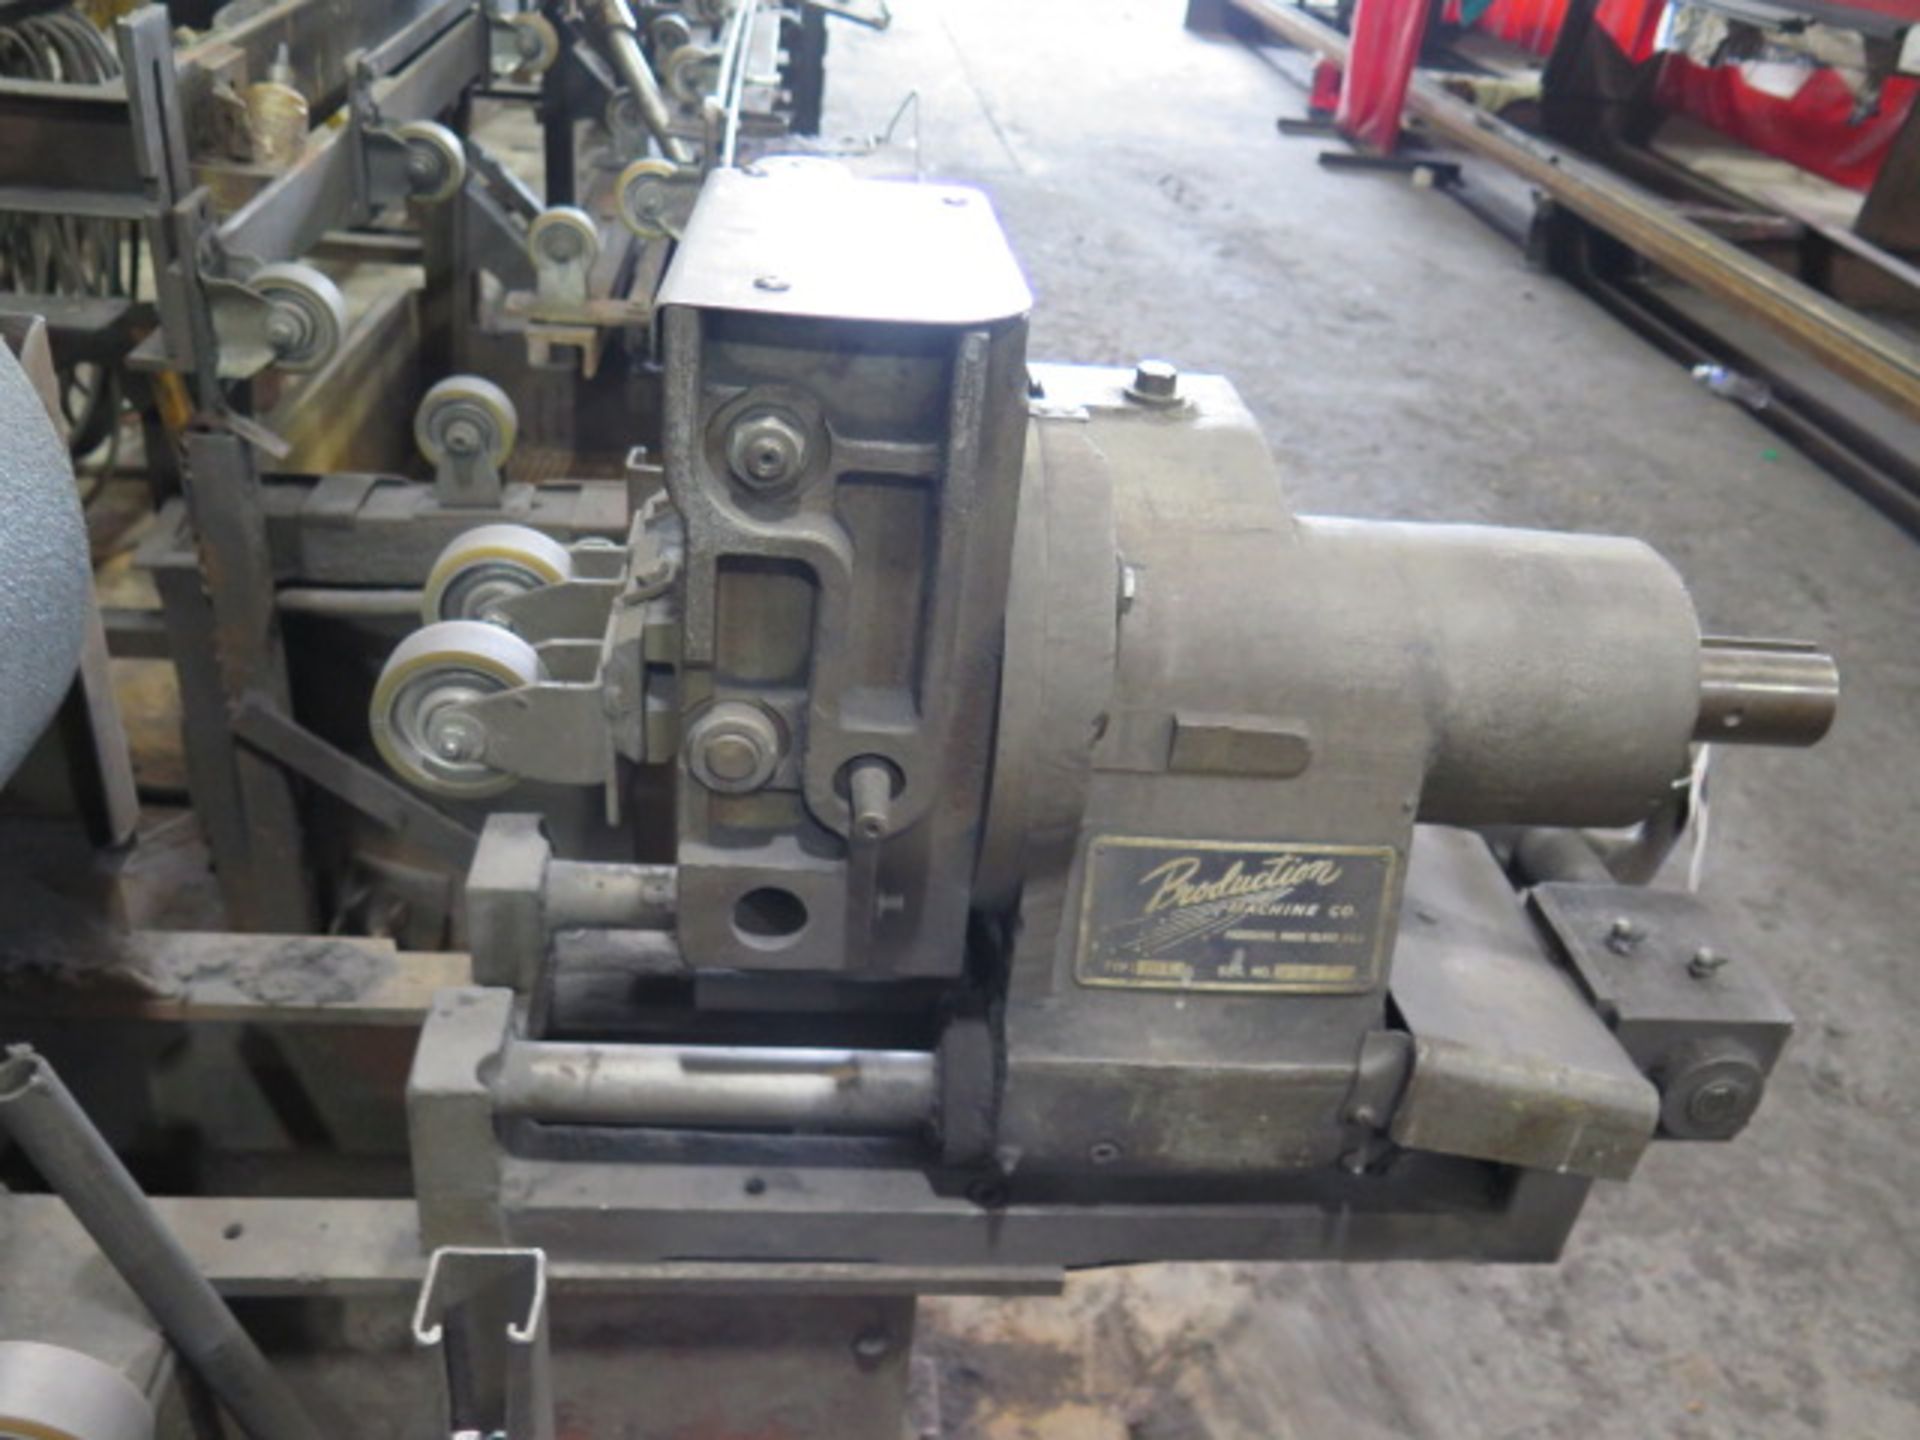 Production Machine Co Custom 6” Belt Sander / Tube Finishing Machine. (SOLD AS-IS - NO WARRANTY) - Image 6 of 16